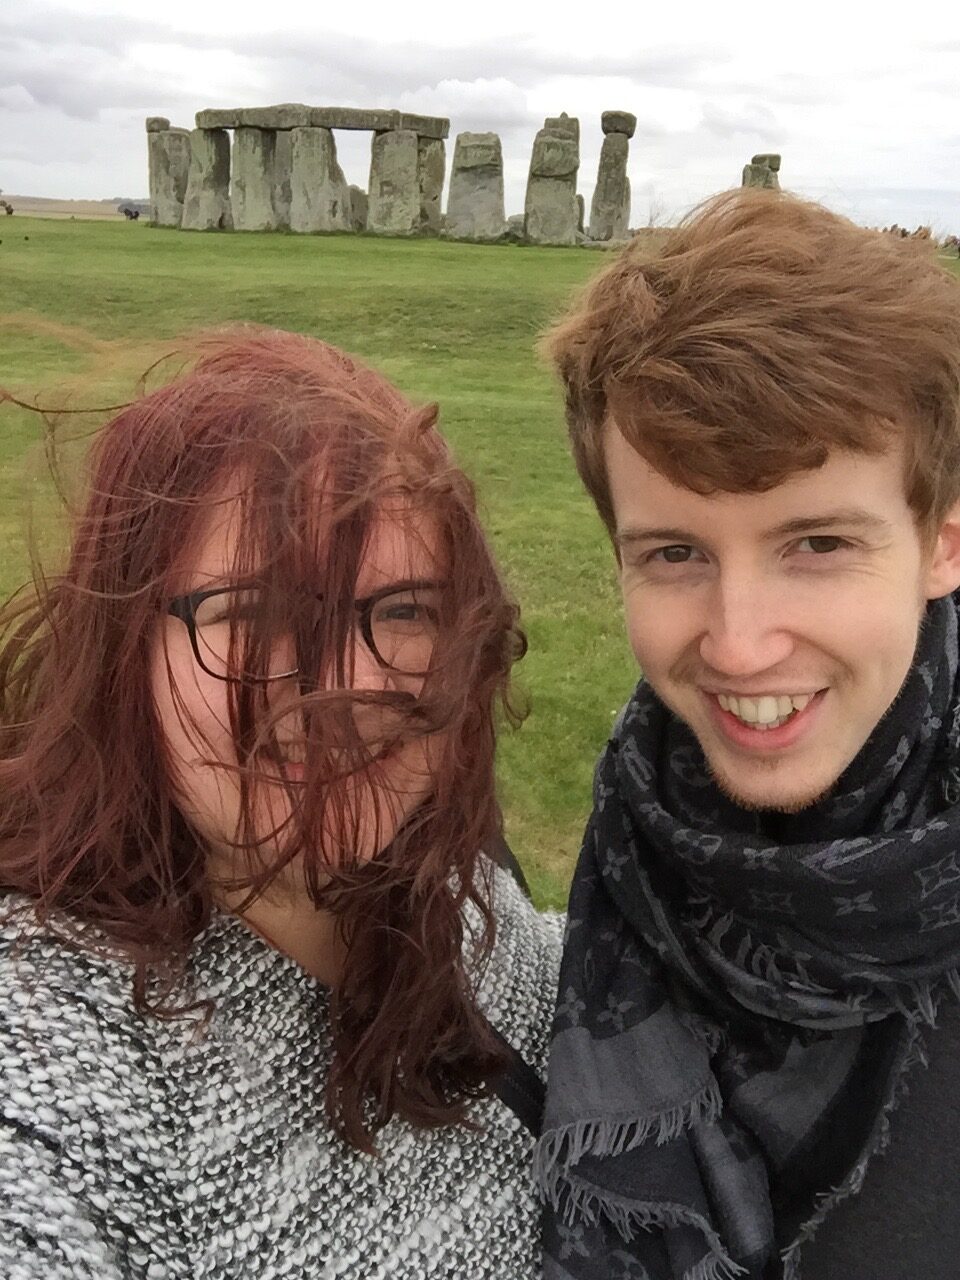 Leah and matt at stonehenge 2015 uk